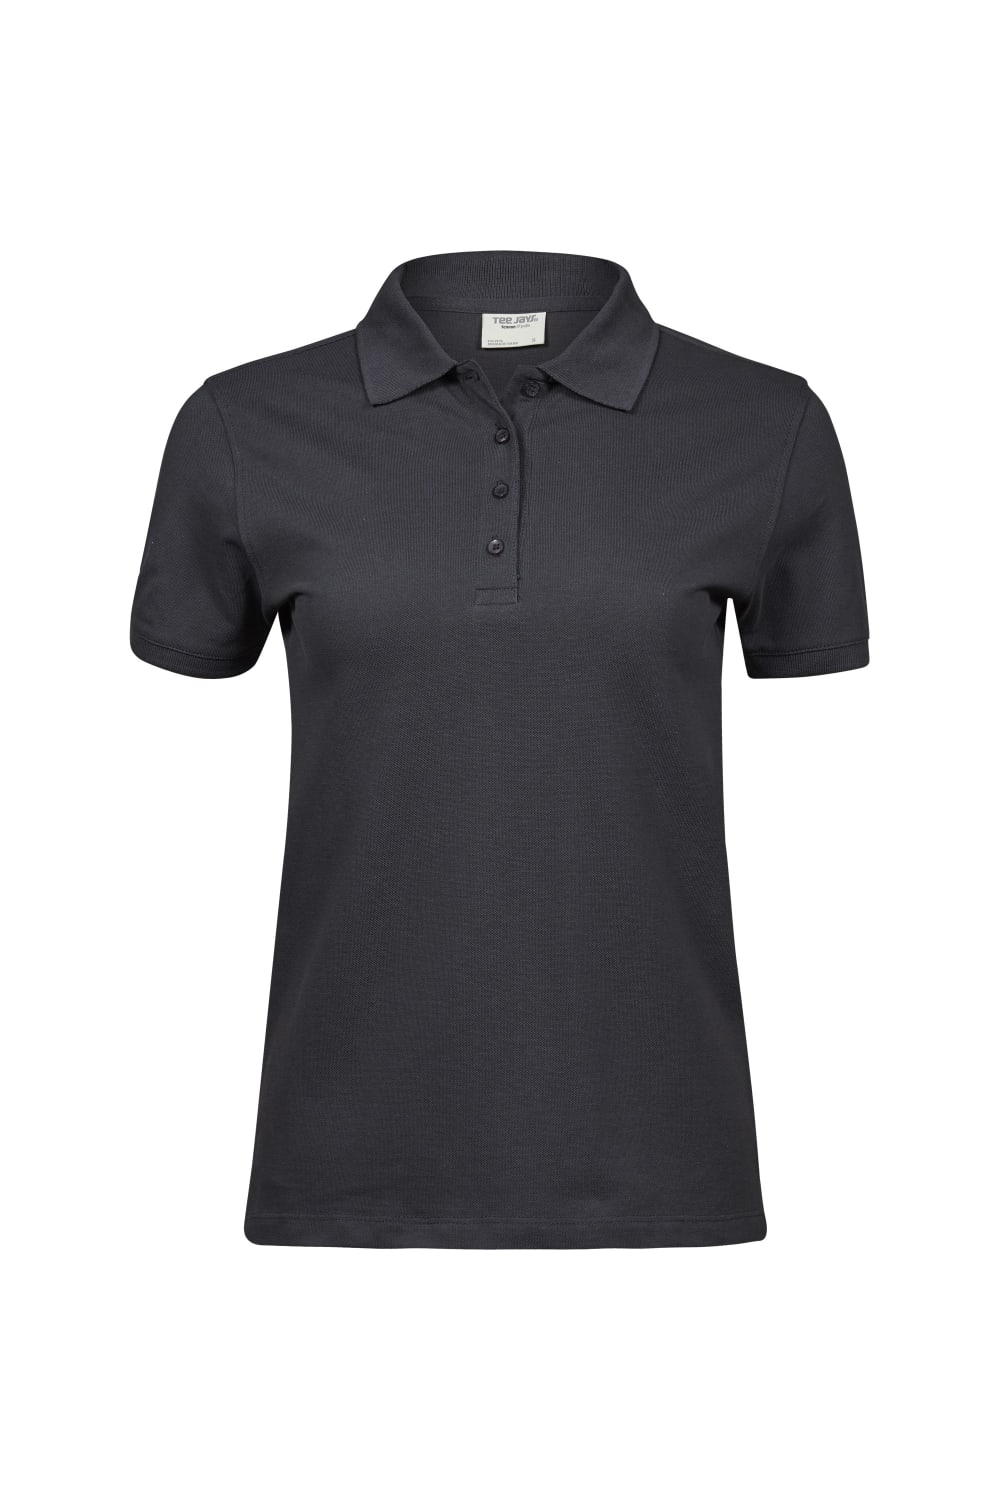 Tee Jays Womens/Ladies Heavy Cotton Pique Polo Shirt (Dark Gray)